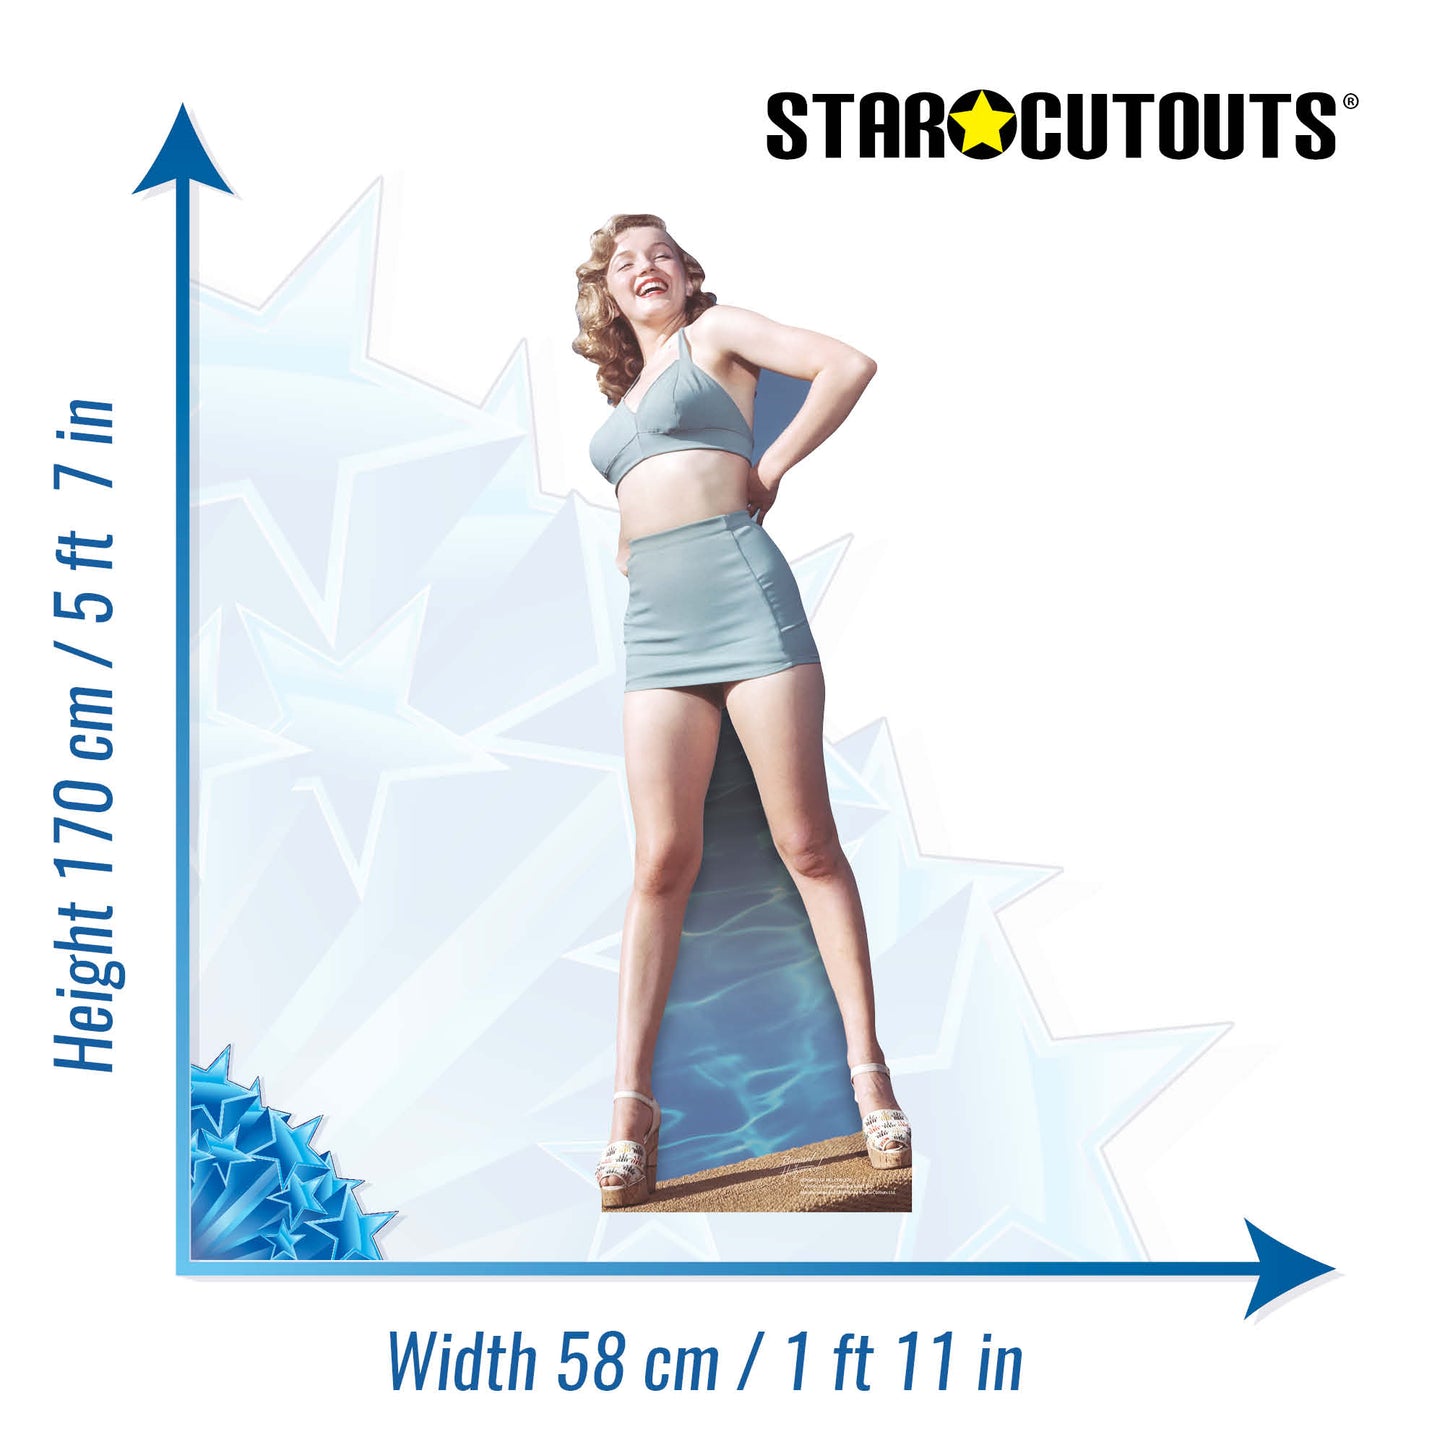 Marilyn Monroe Blue Bikini Cardboard Cutout